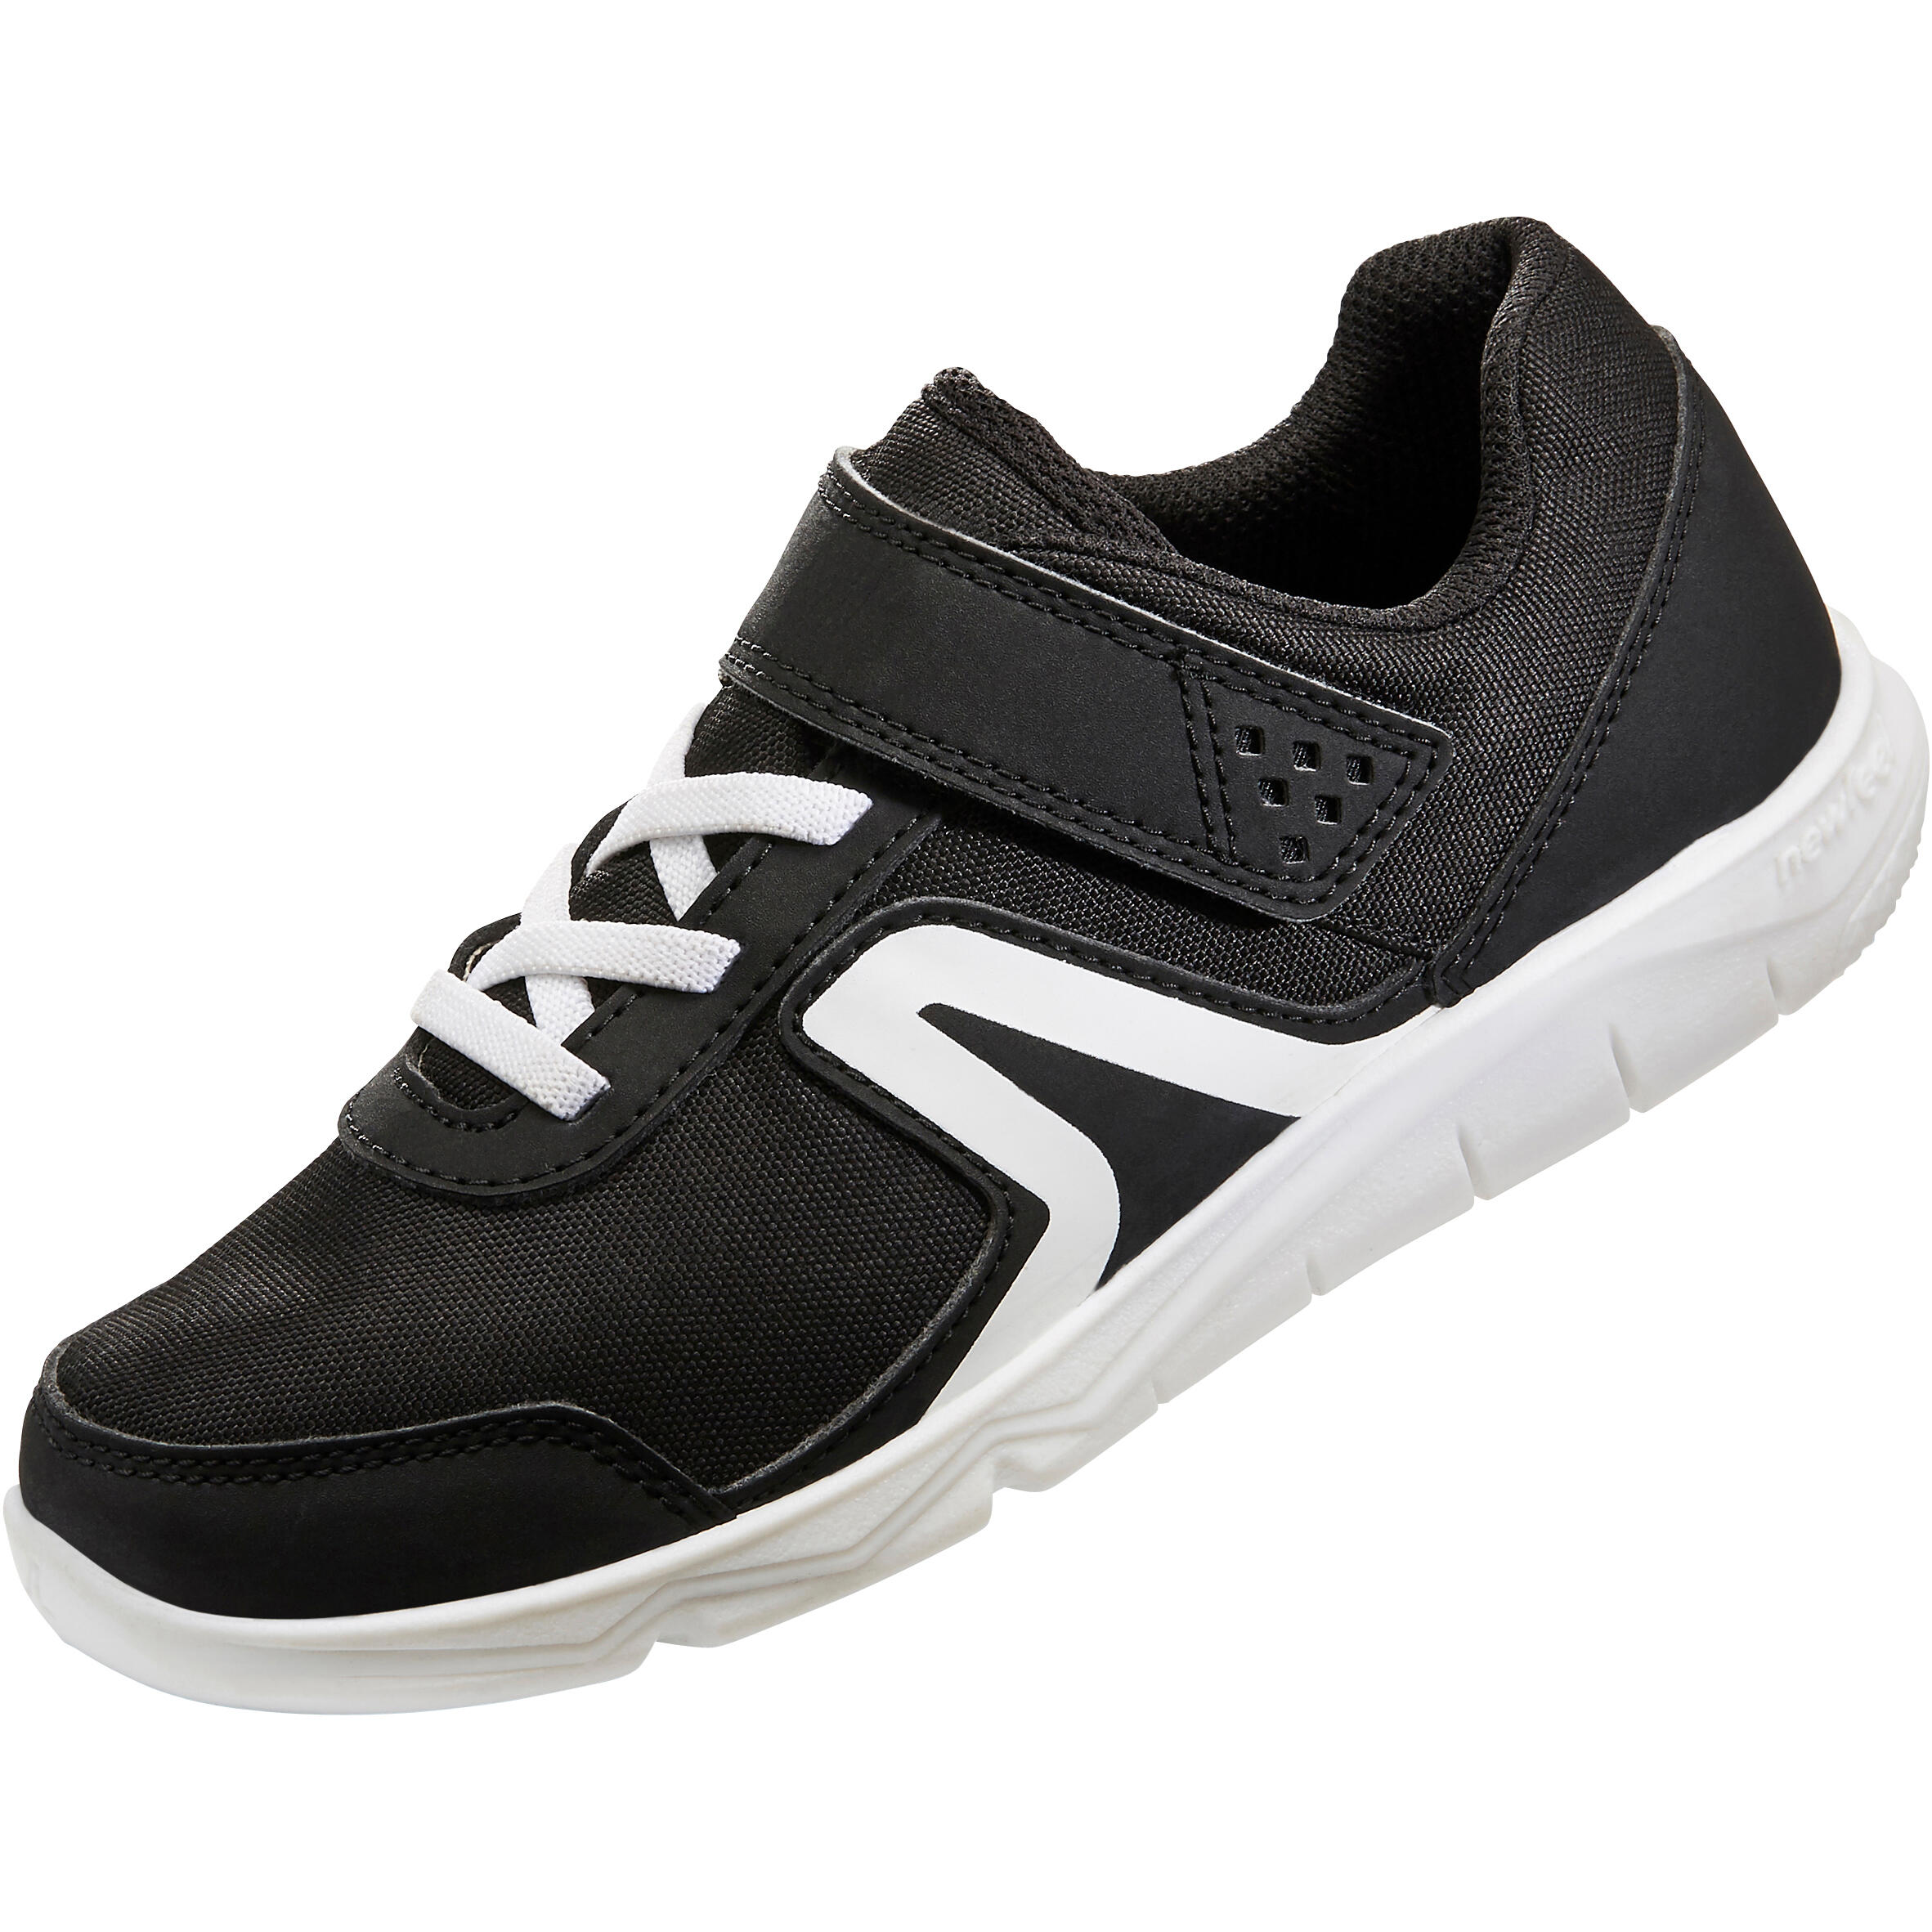 Buy Kids' Tennis Shoes TS530 - Black Online | Decathlon